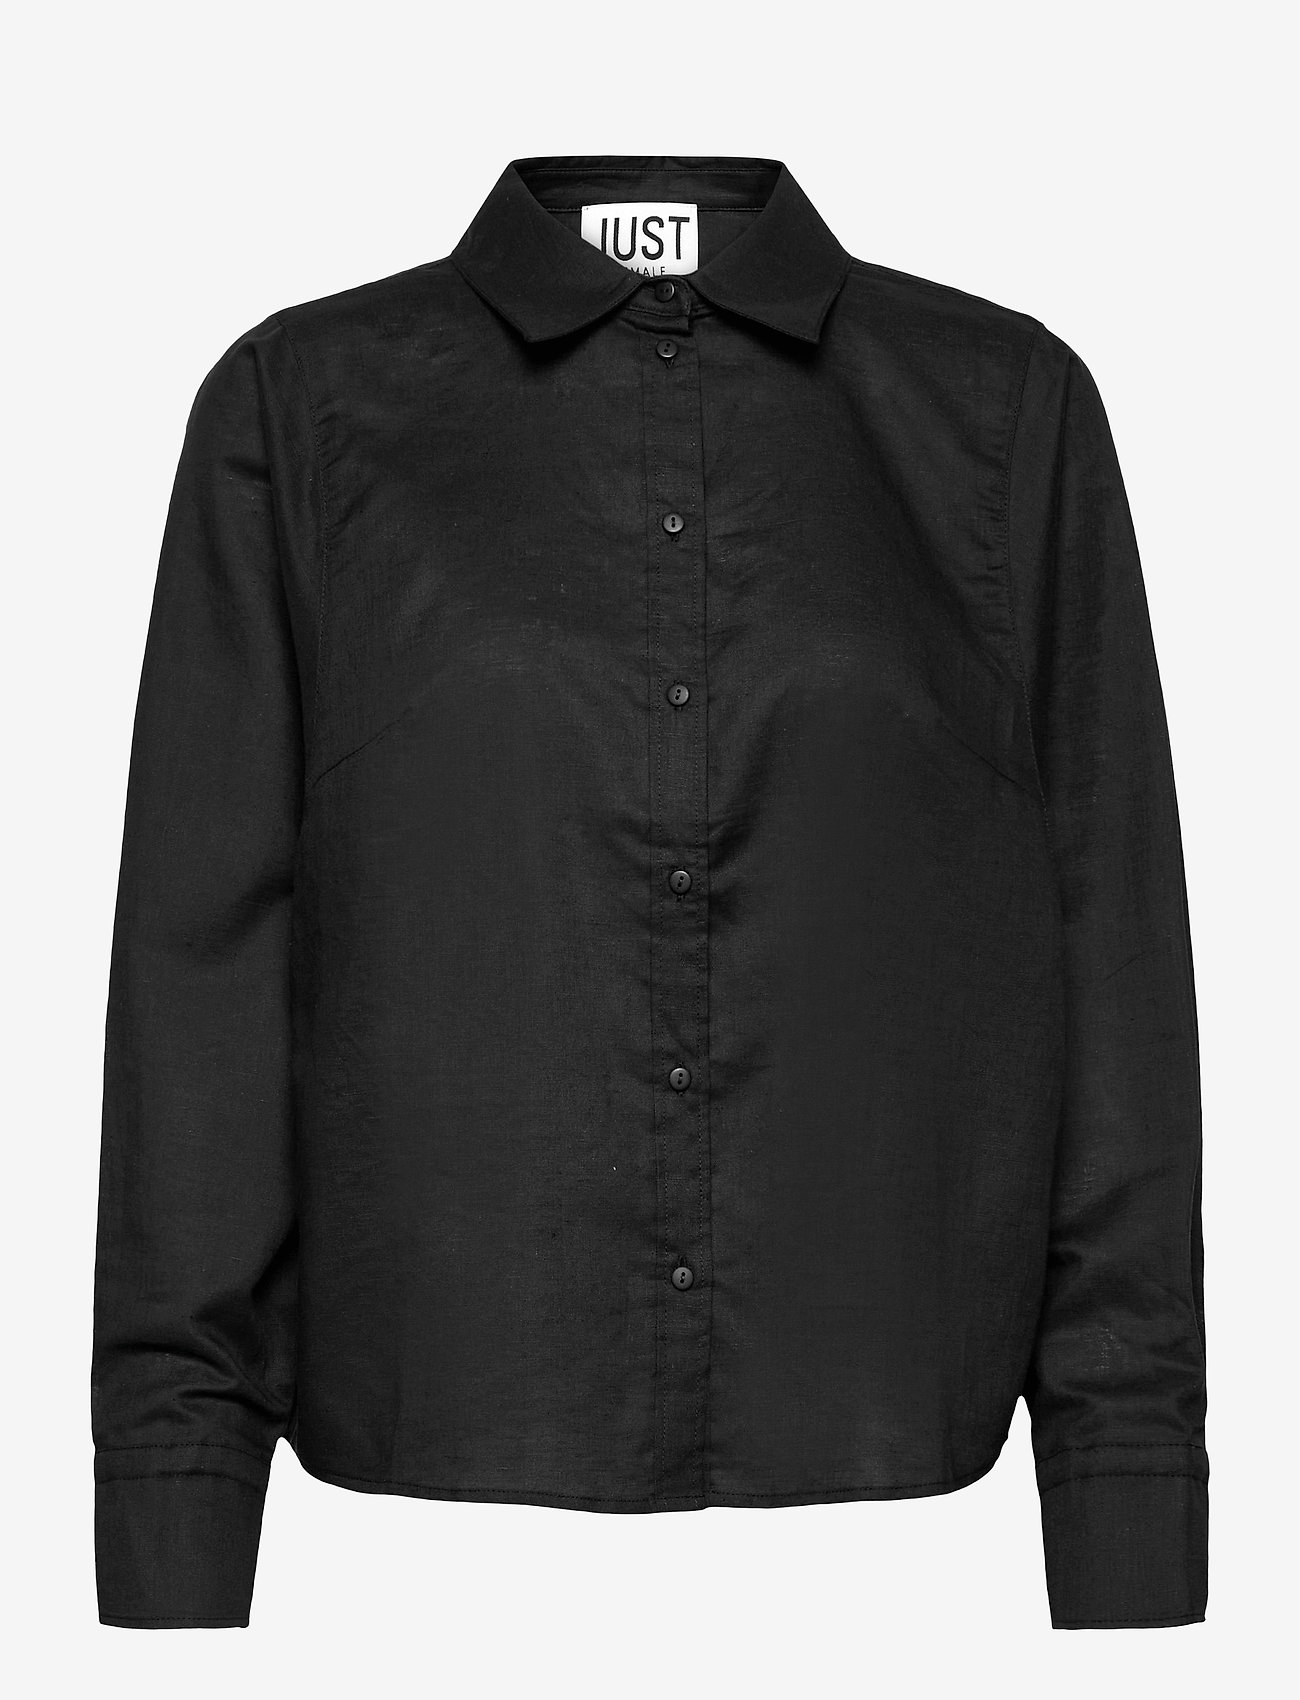 Just Female - Collin shirt - hørskjorter - black - 0